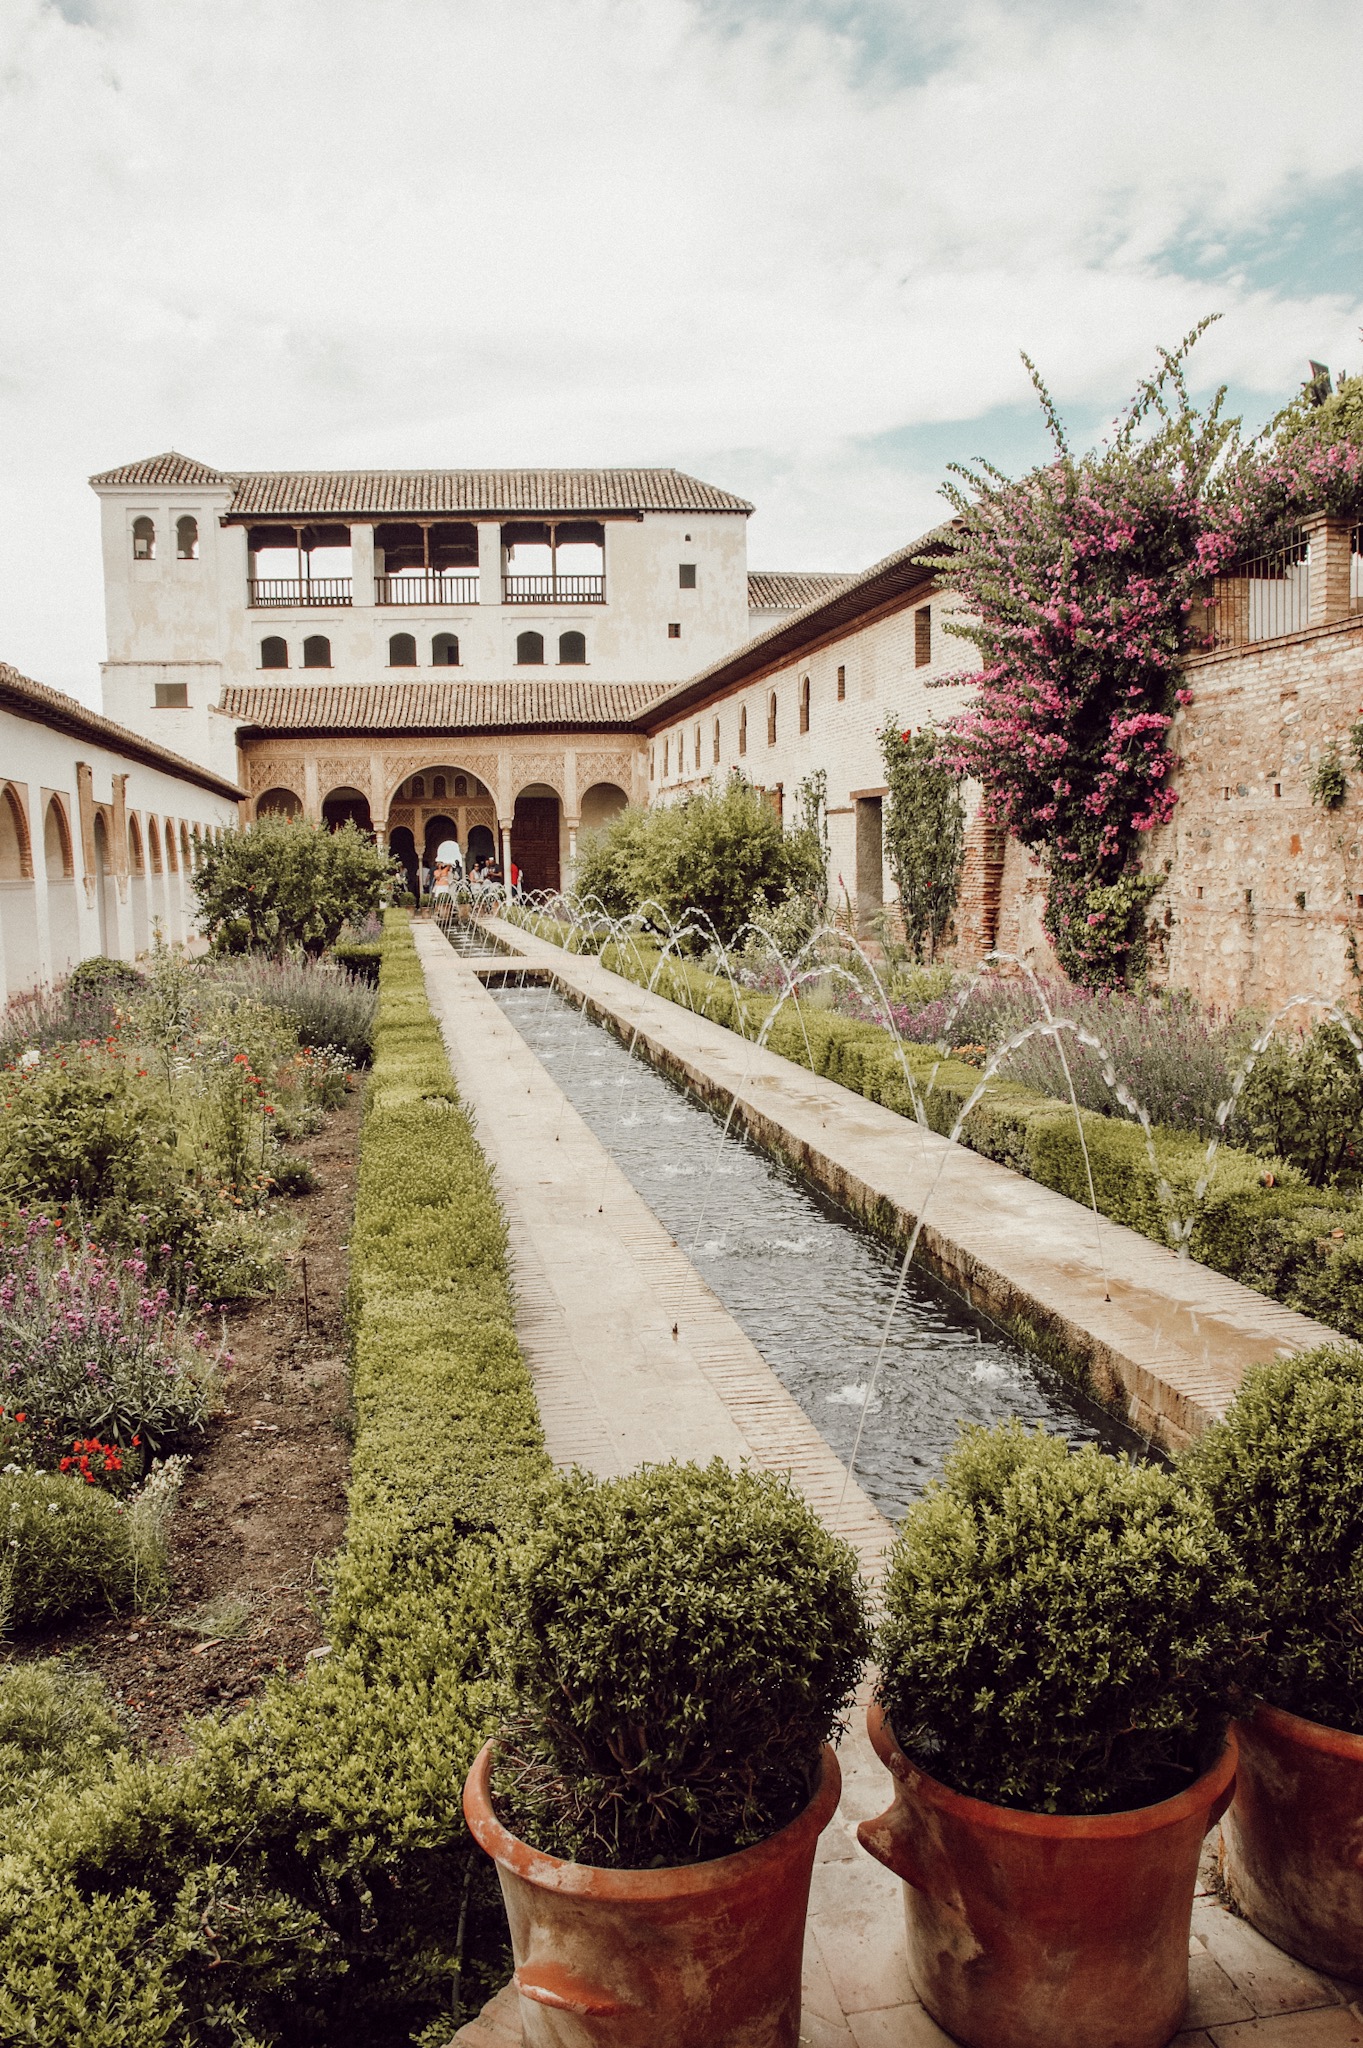 Granada Generalife